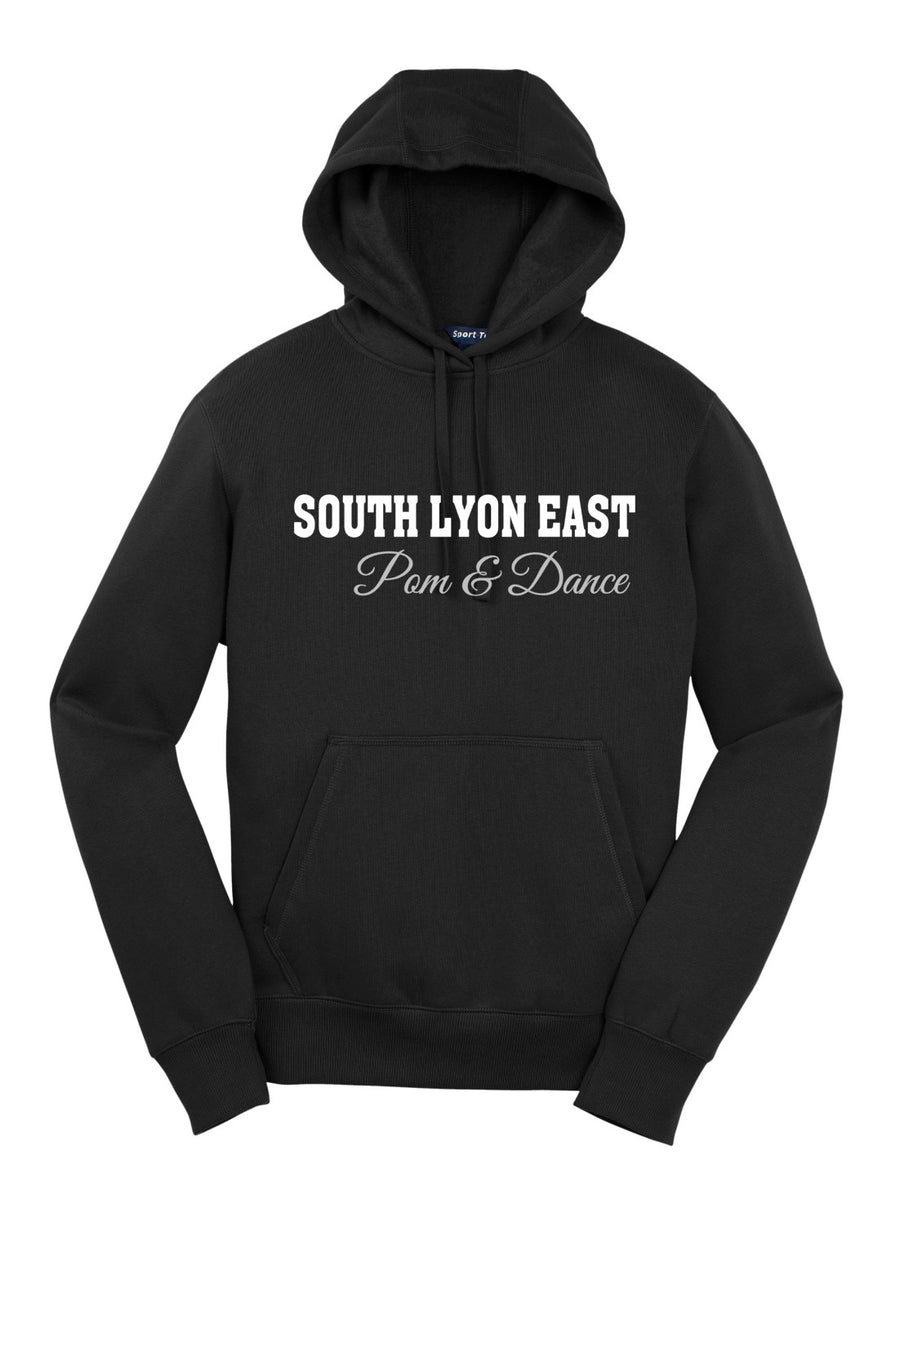 South Lyon East Pom & Dance Premium Hoodie